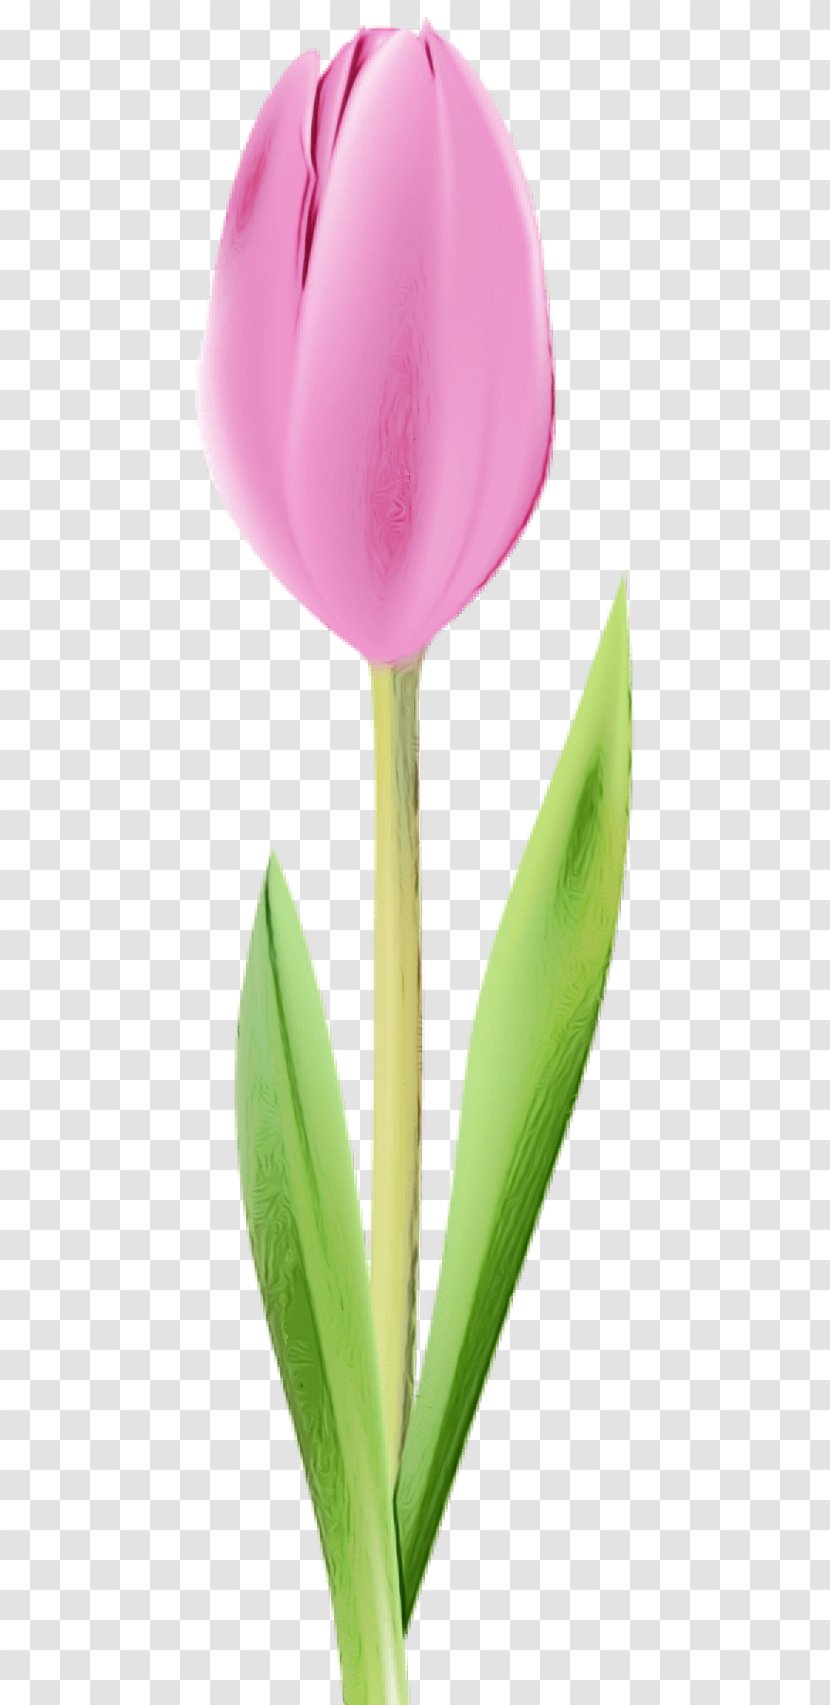 Flower Tulip Petal Plant Flowering - Paint - Bud Lily Family Transparent PNG